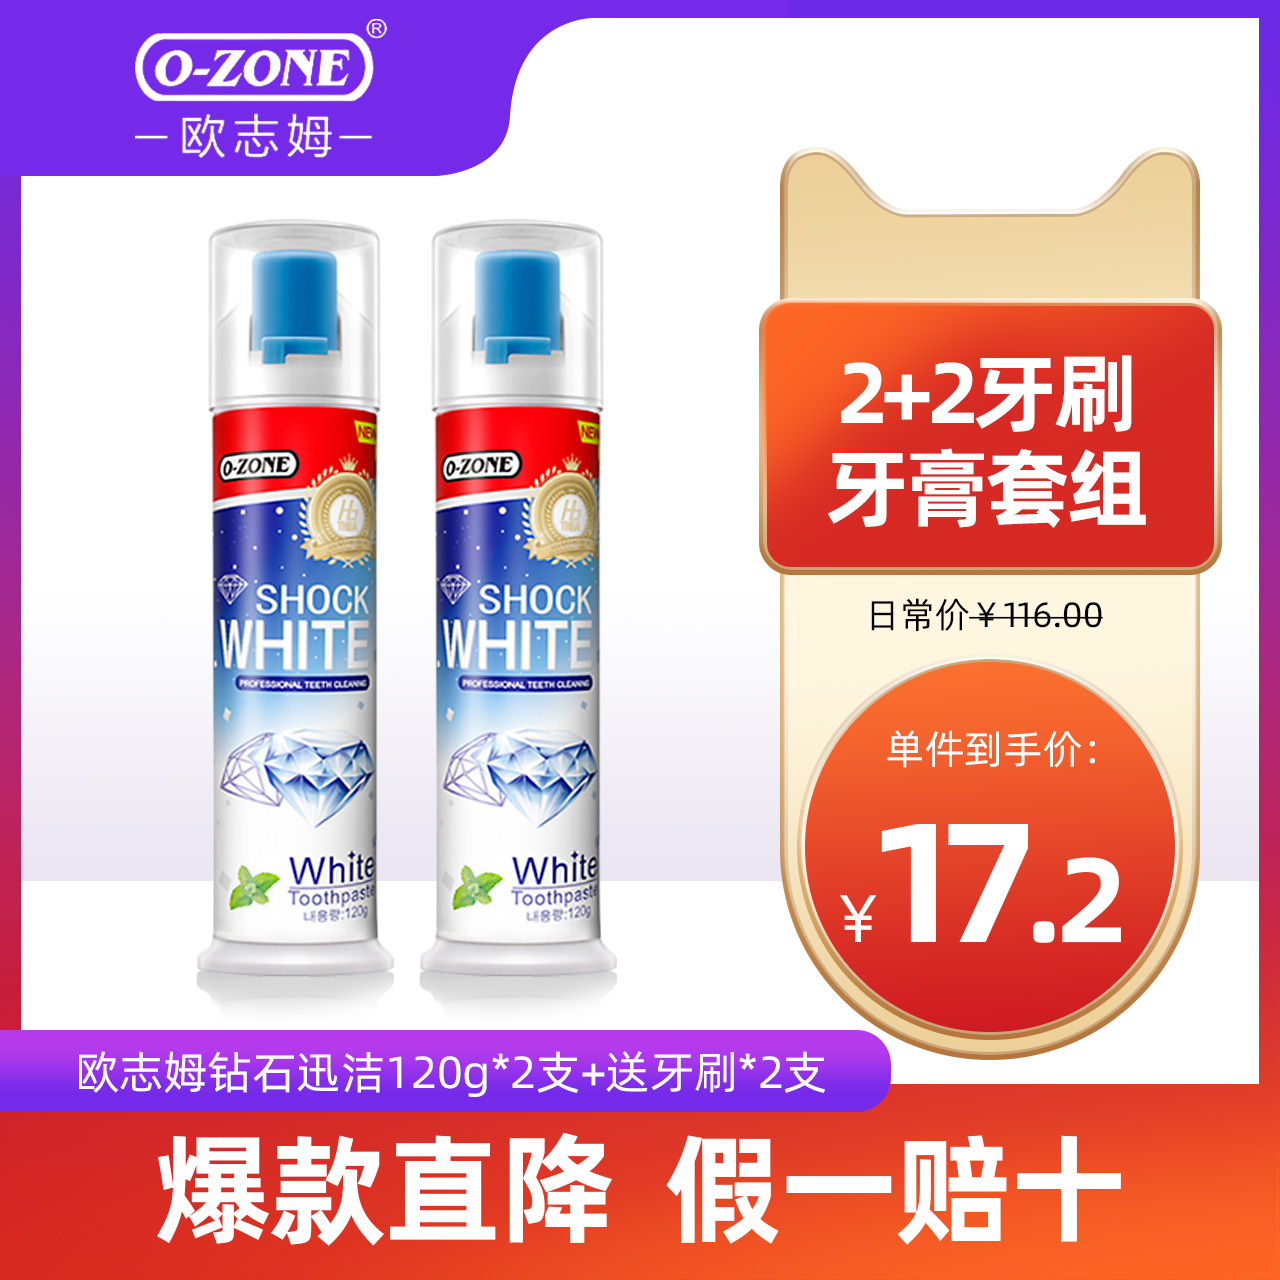 O-ZONE 欧志姆 小苏打按压牙膏ozone欧志姆韩国进口牙膏牙刷套装直立泵